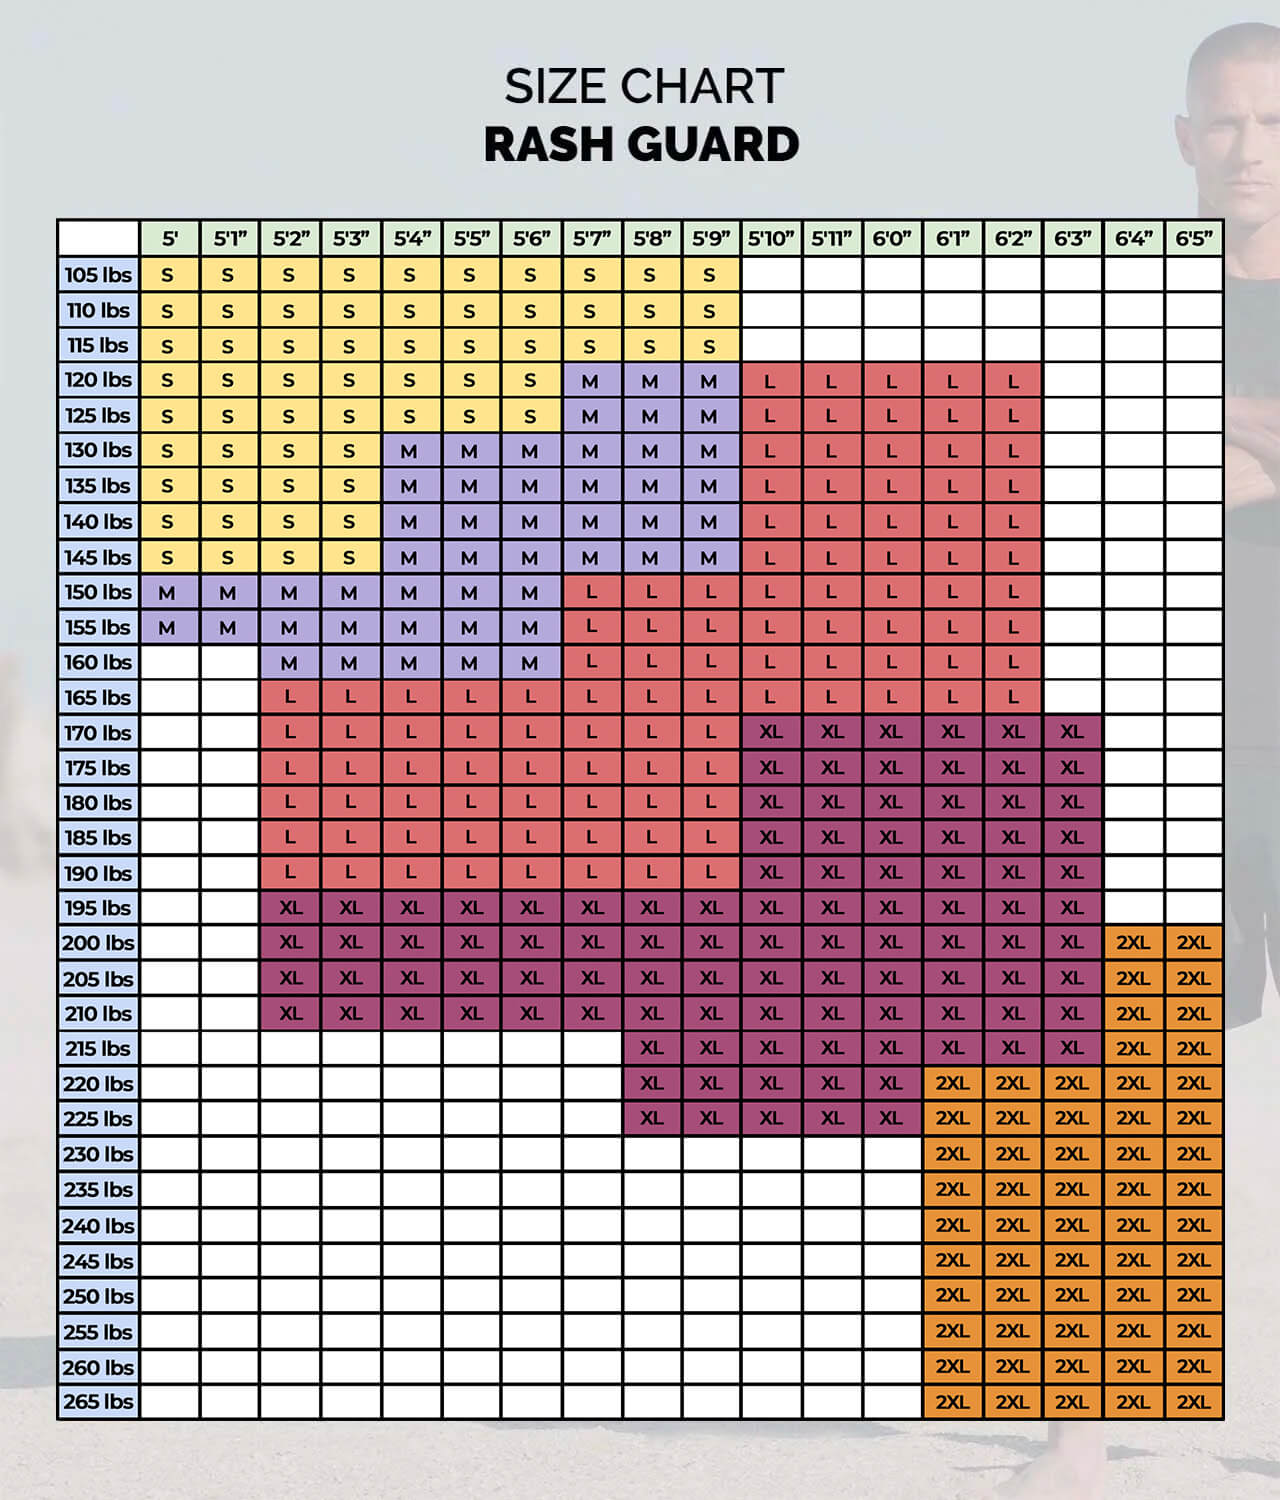 Elite Sports Men's Standard White Short Sleeve Jiu Jitsu BJJ Rash Guard Size Guide